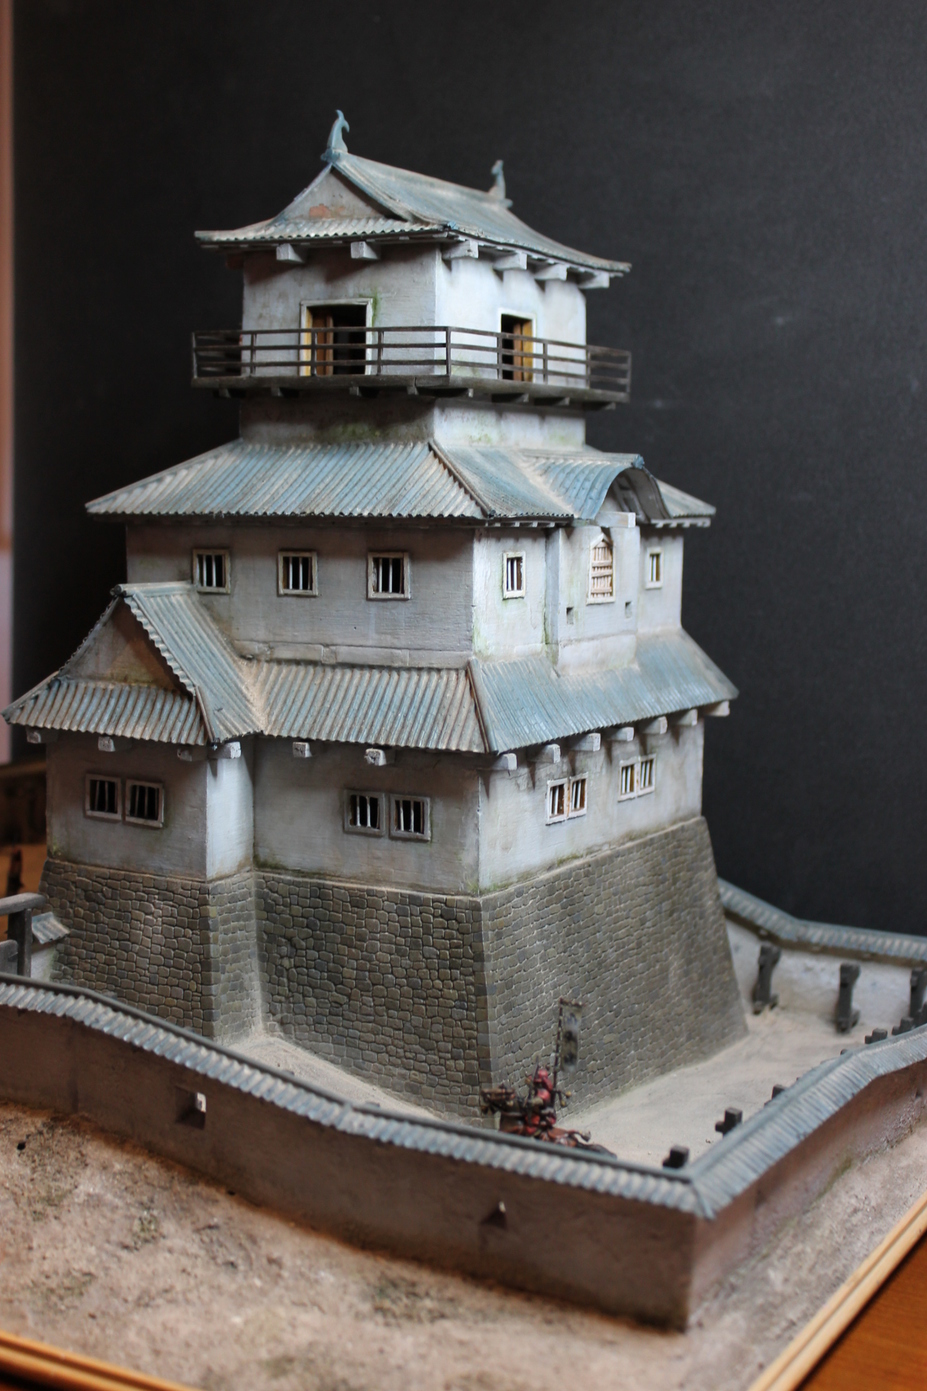 Kakegawa castle. 1600. Scale 1/72. Small 